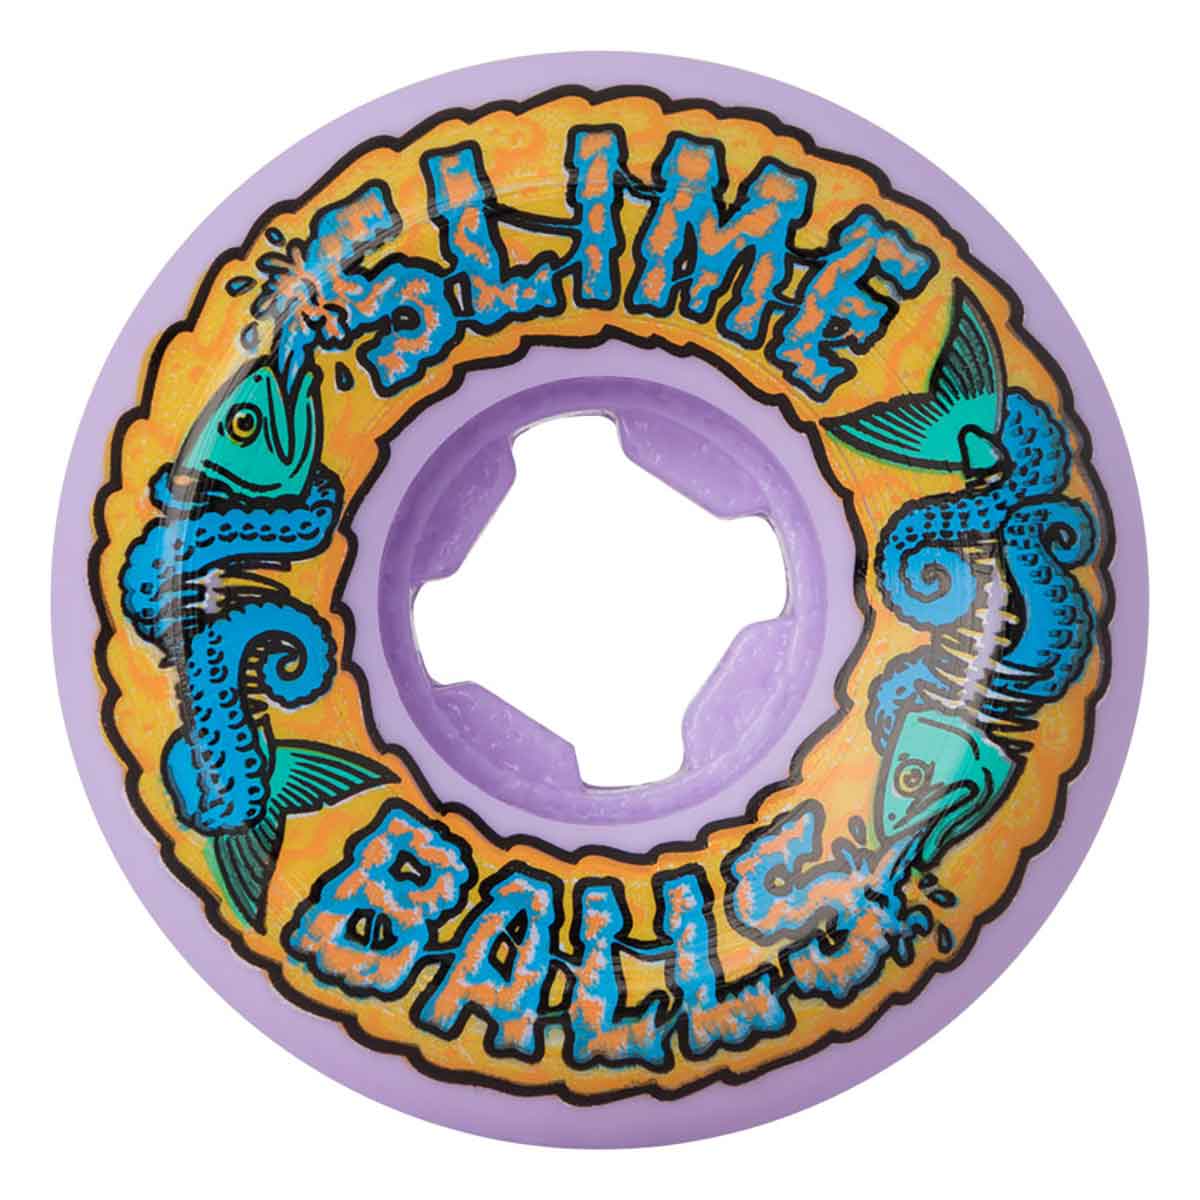 Santa Cruz Slime Balls Fish Balls Speed Balls Skateboard Wheels 54mm/99a  Purple